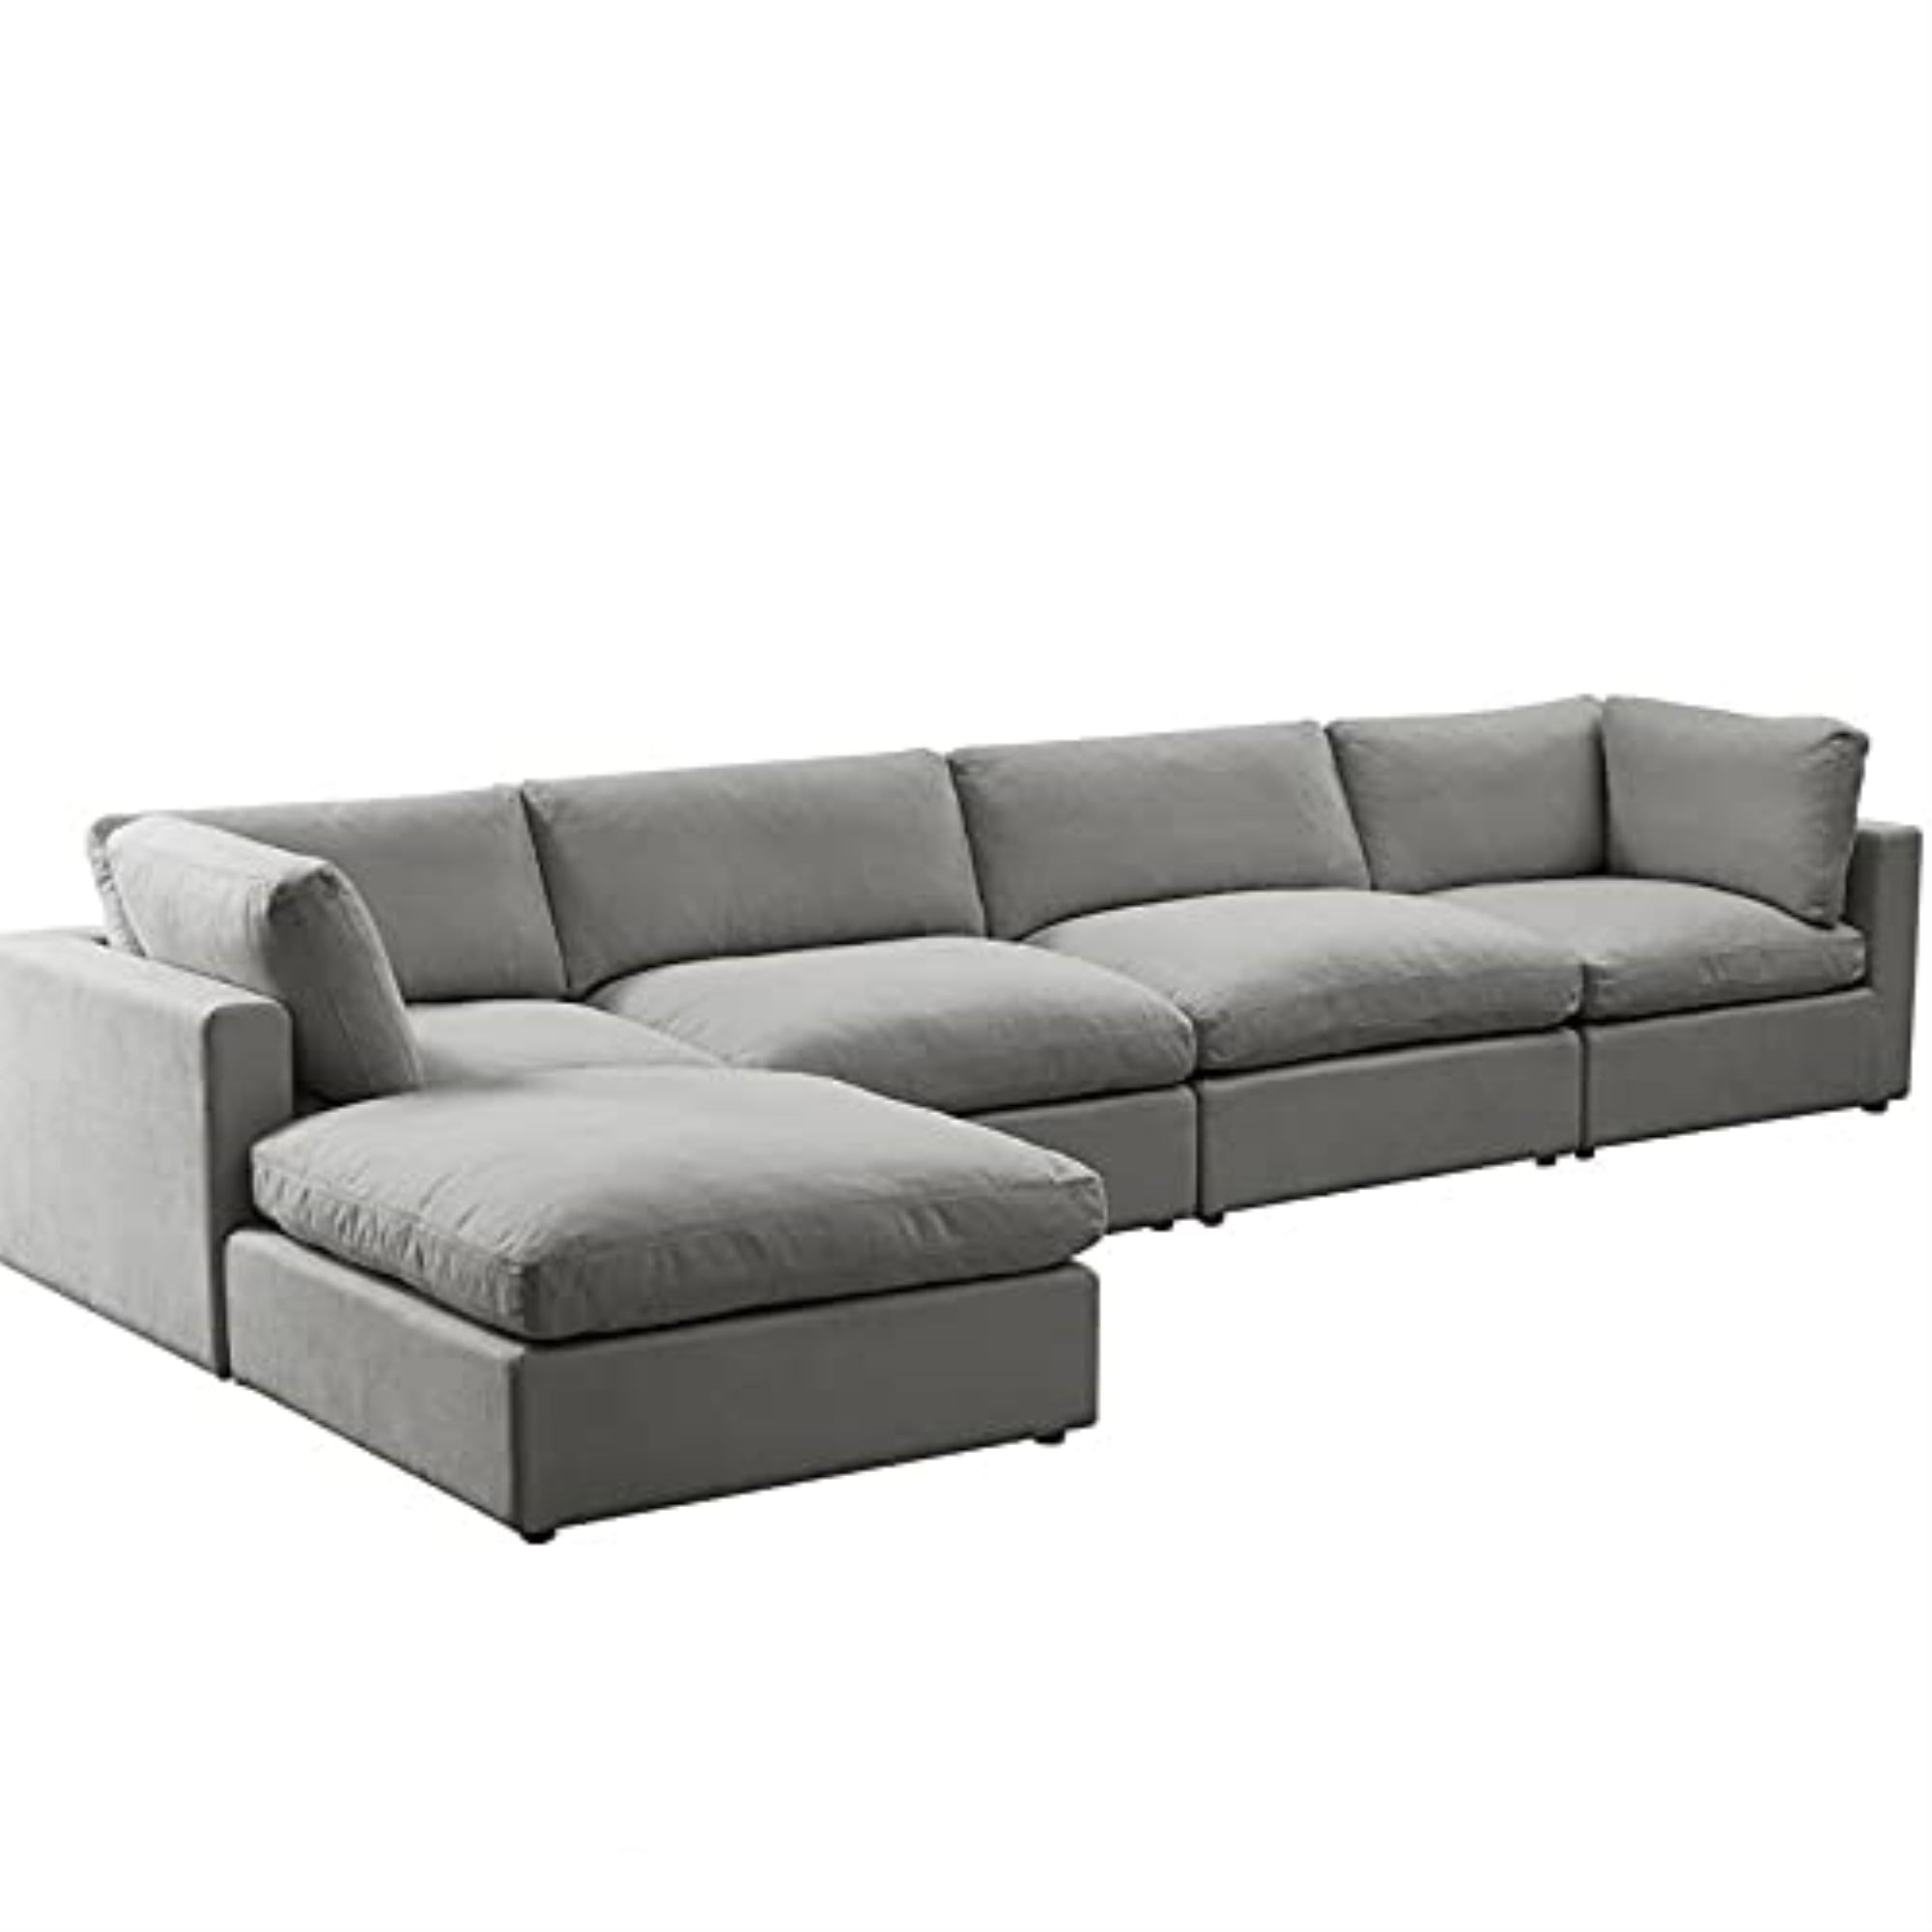 Kaelynn Linen Sofas Chaise, Grey – Walmart Inside Gray Linen Sofas (Photo 2 of 15)